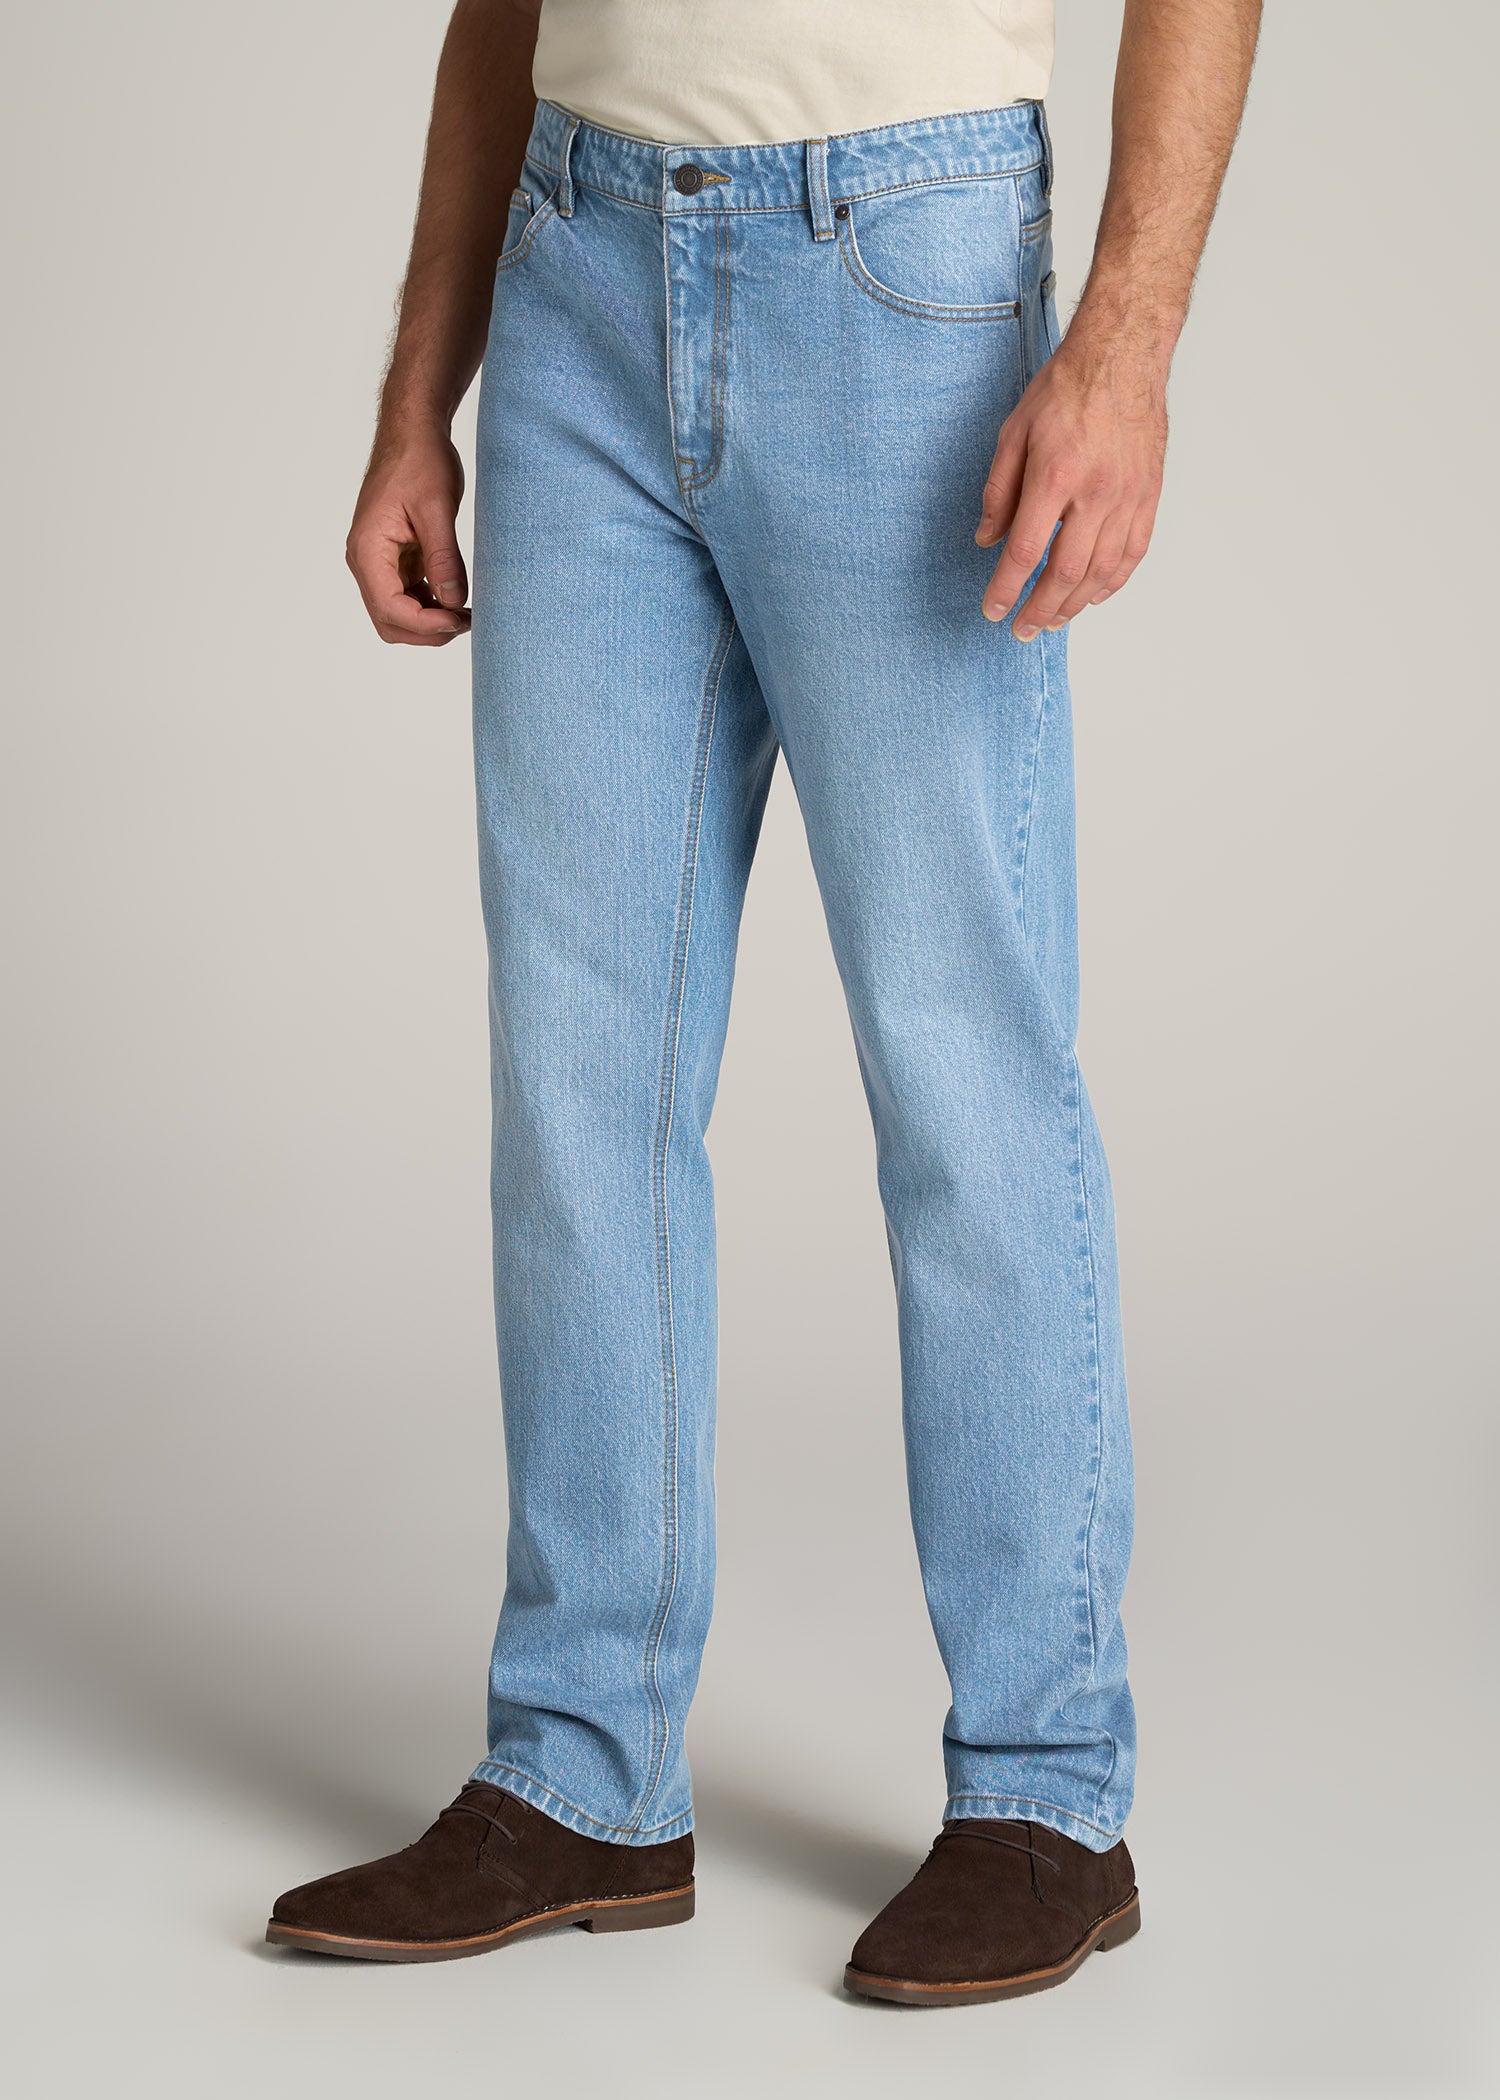 naaien Taalkunde Verwoesten LJ&S Men's Tall Jeans Straight Leg Stone Wash Light Blue – American Tall